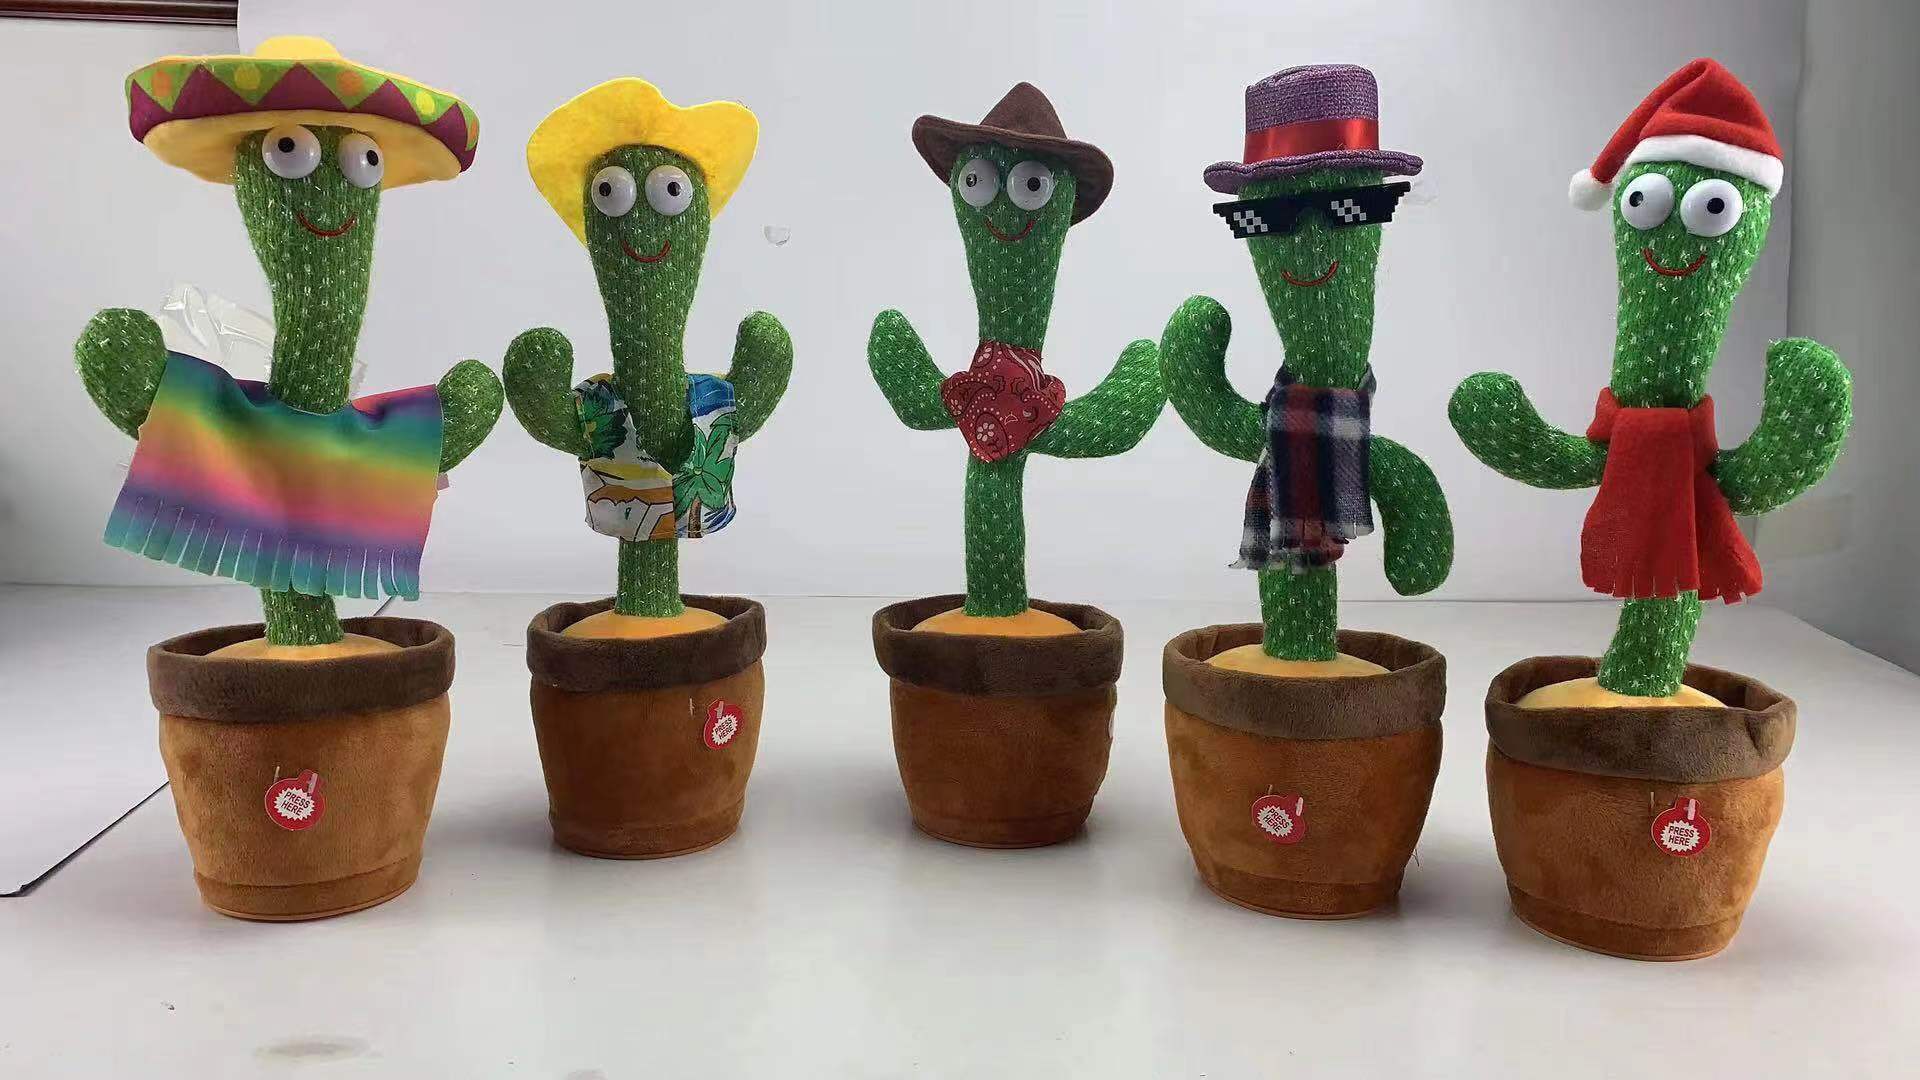 Tiktok Same Style Sand Carving Internet Celebrity Dancing Cactus Amazon Singing Tongue Learning Birthday Funny Plush Toy